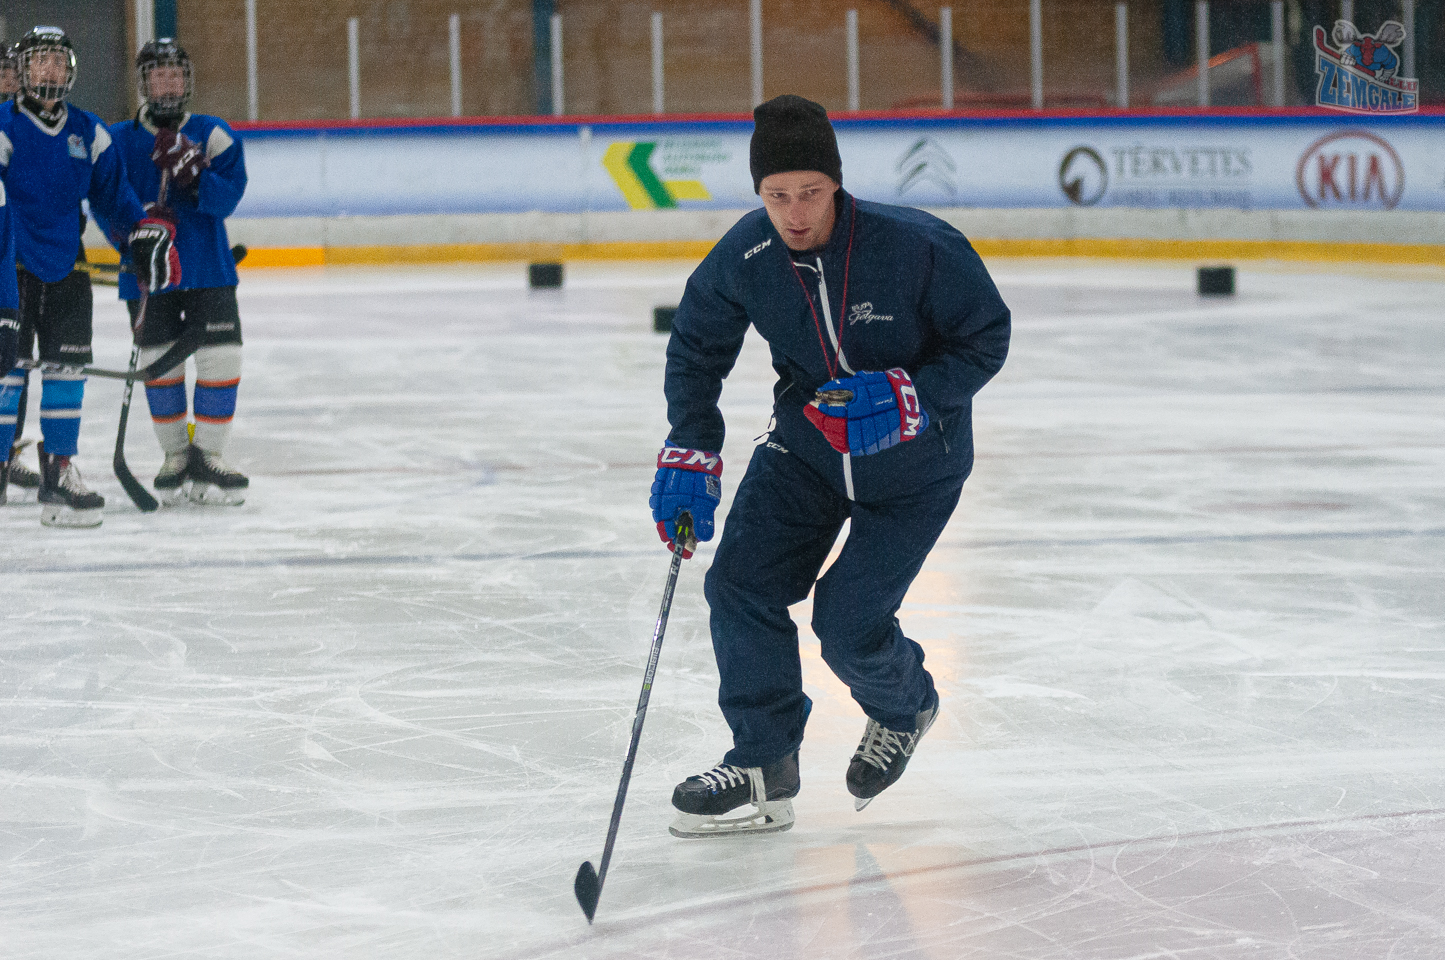 Jelgavas ledus sporta skolas U15 vecuma grupas audzēkņi aizvada treniņu Jelgavas ledus hallē Rihards Cimermanis